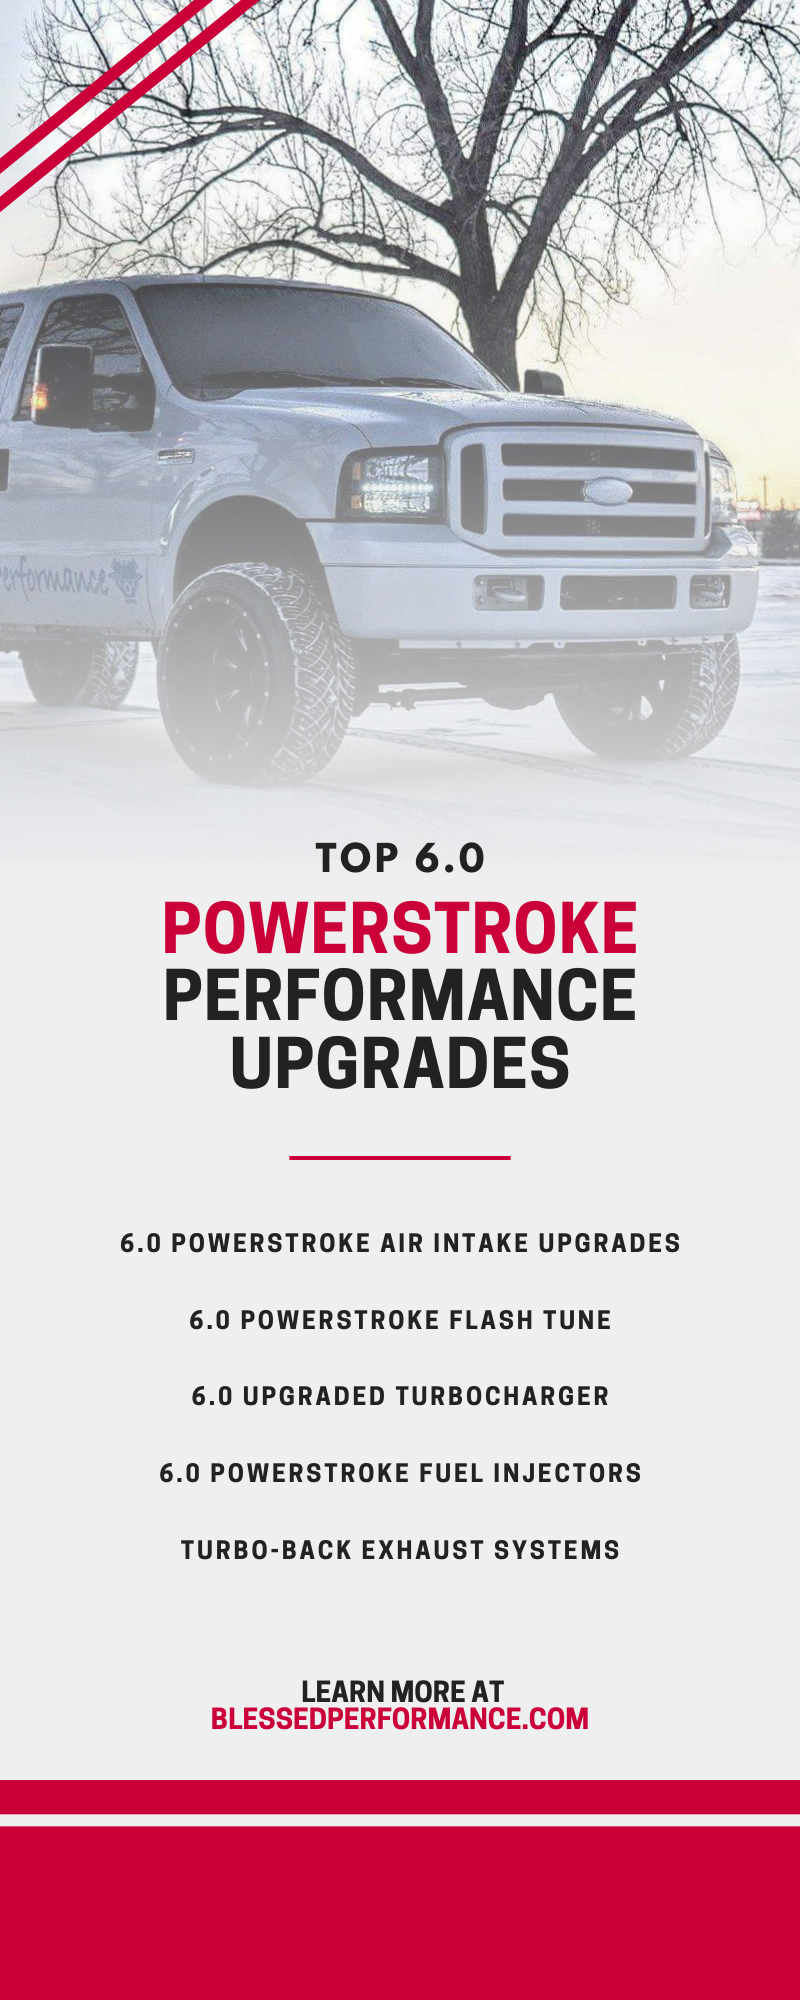 Top 6.0 Powerstroke Performance Upgrades